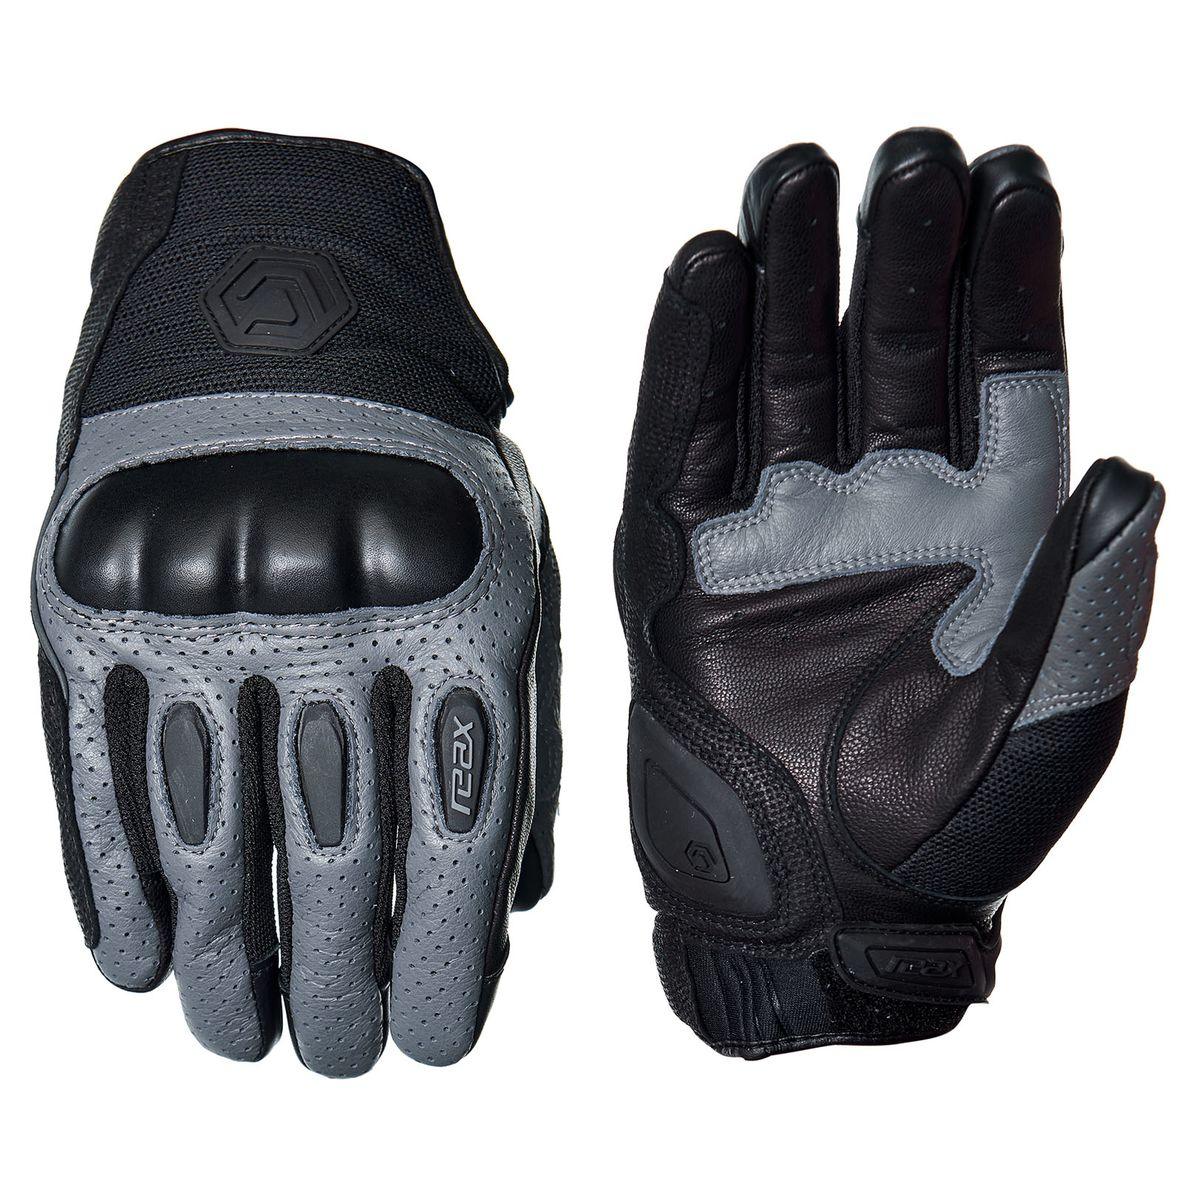 ZMG-009 Motorcycle/Motorbike Custom Made Leather Gloves - ZEES MOTOR SPORTS